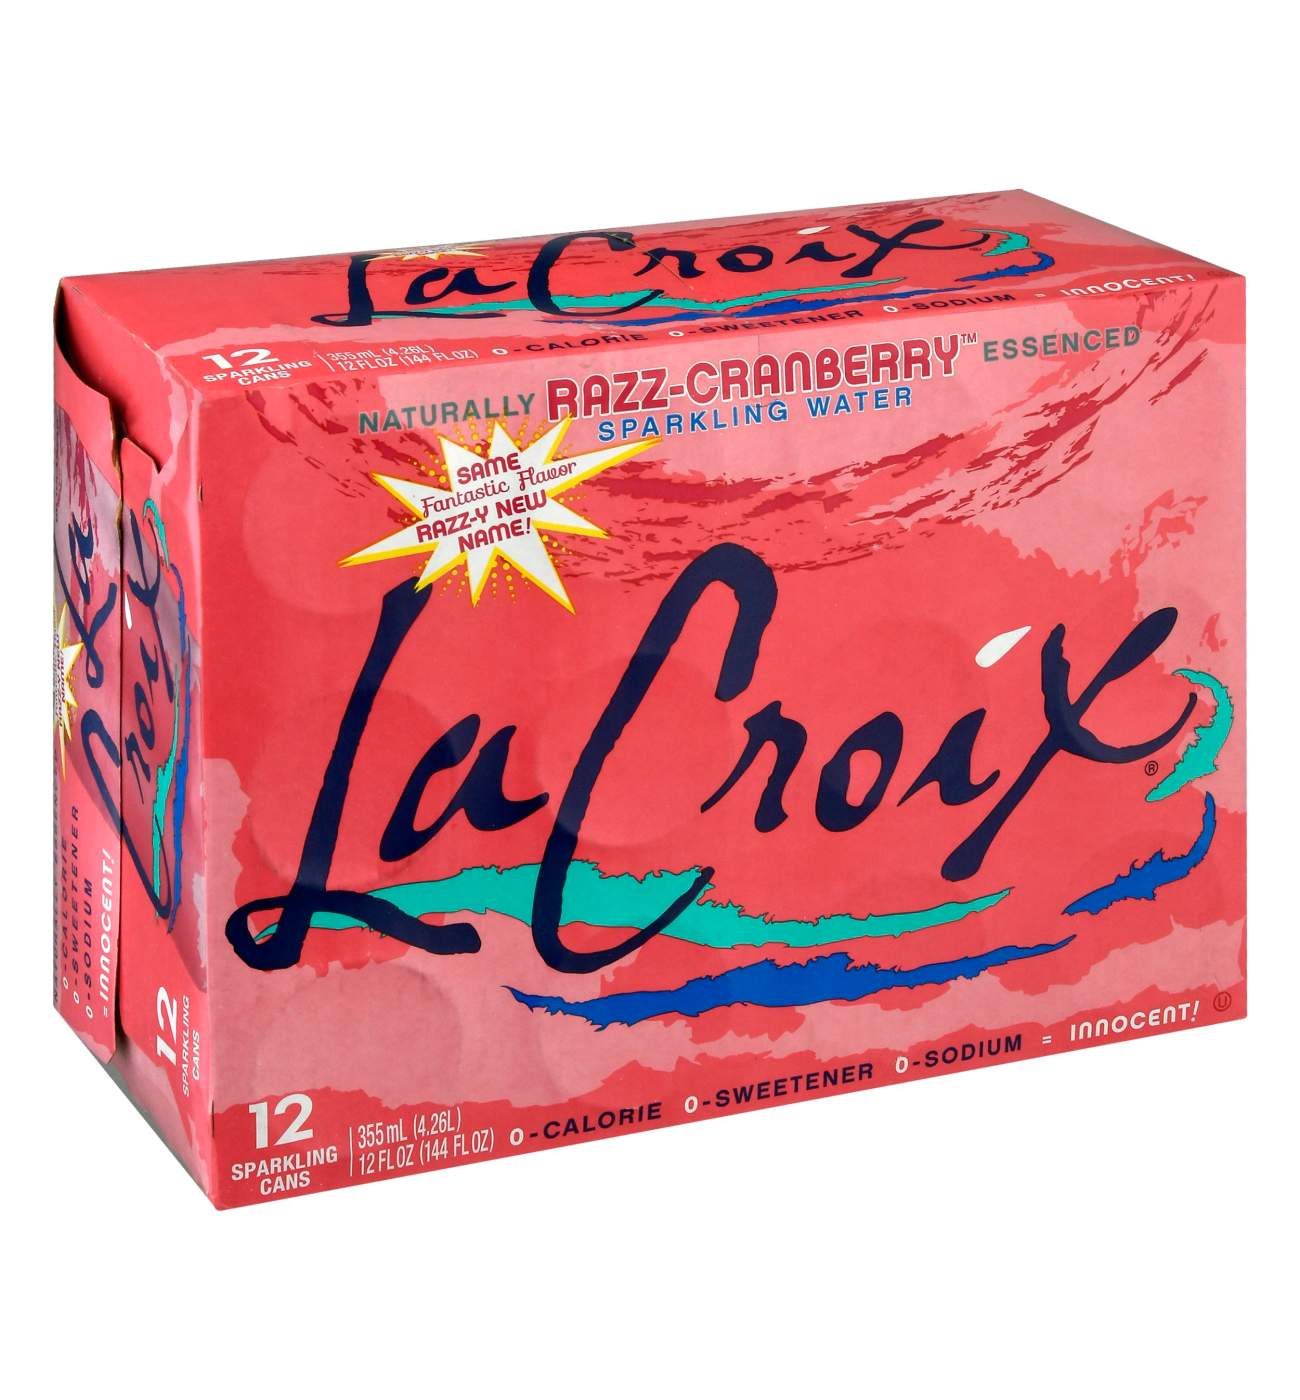 LaCroix Razz-Cranberry Sparkling Water 12 oz Cans; image 1 of 2